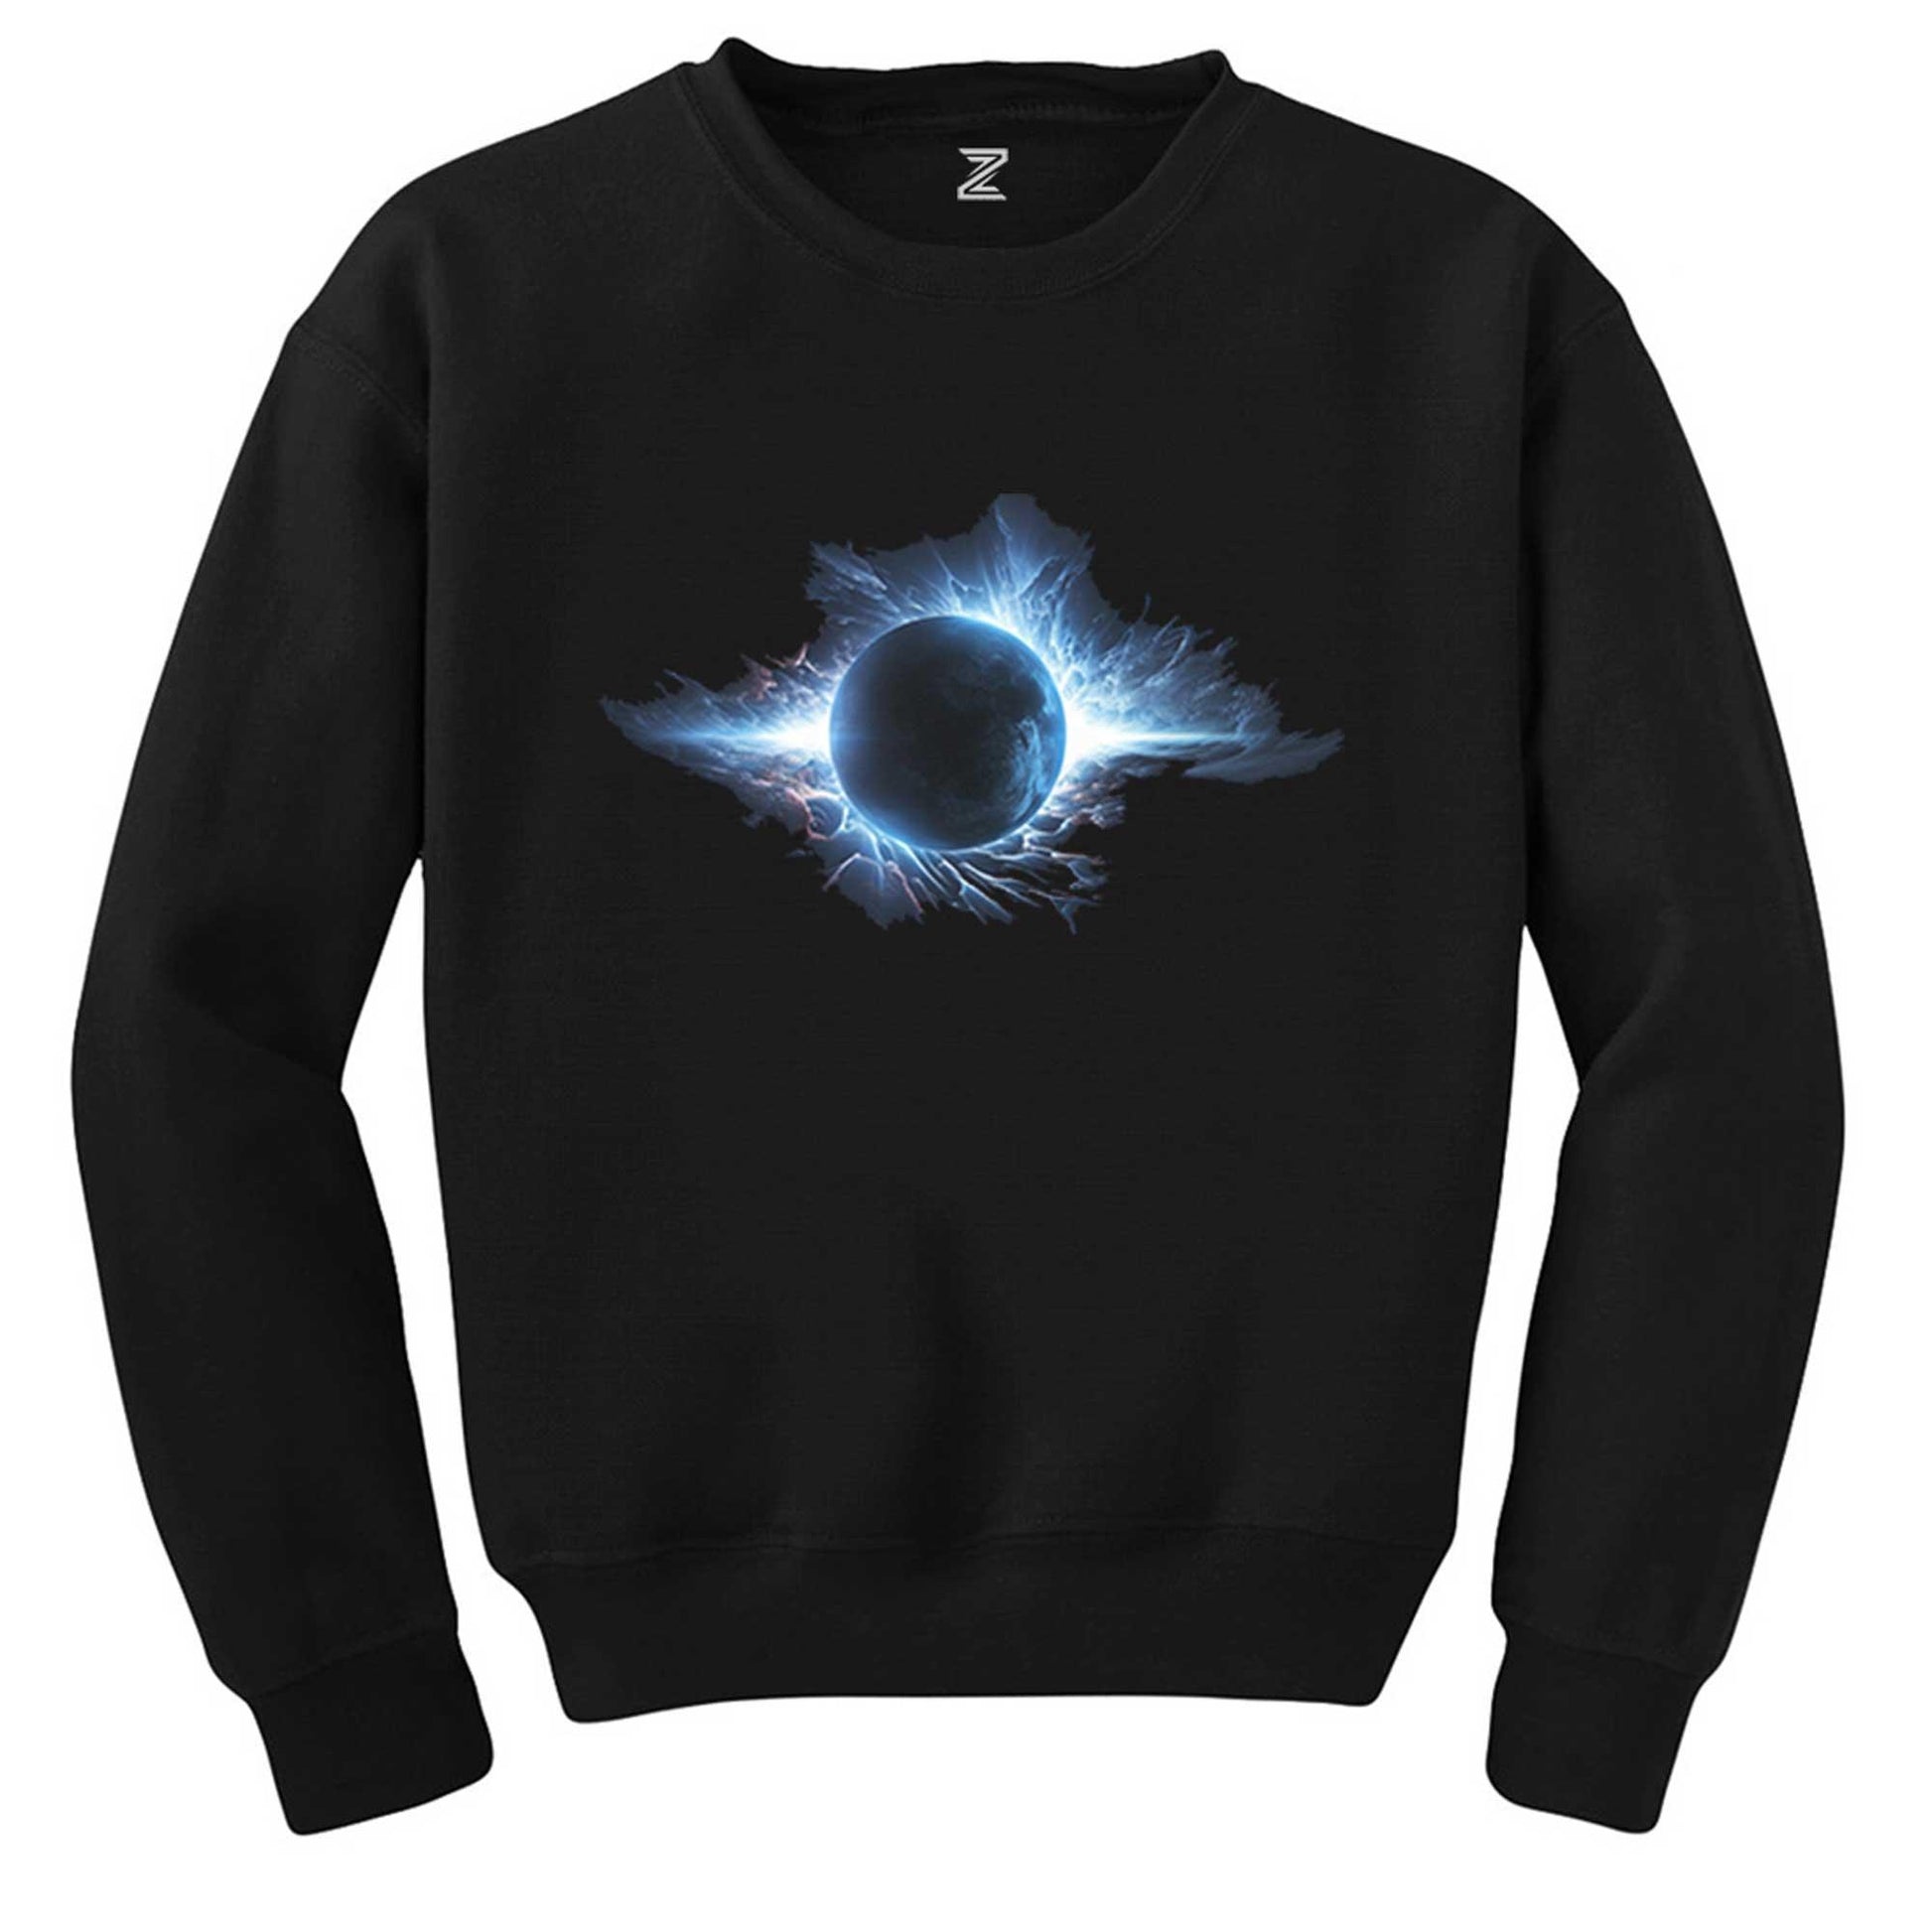 Planet Charged With Blue Energy Siyah Sweatshirt - Zepplingiyim